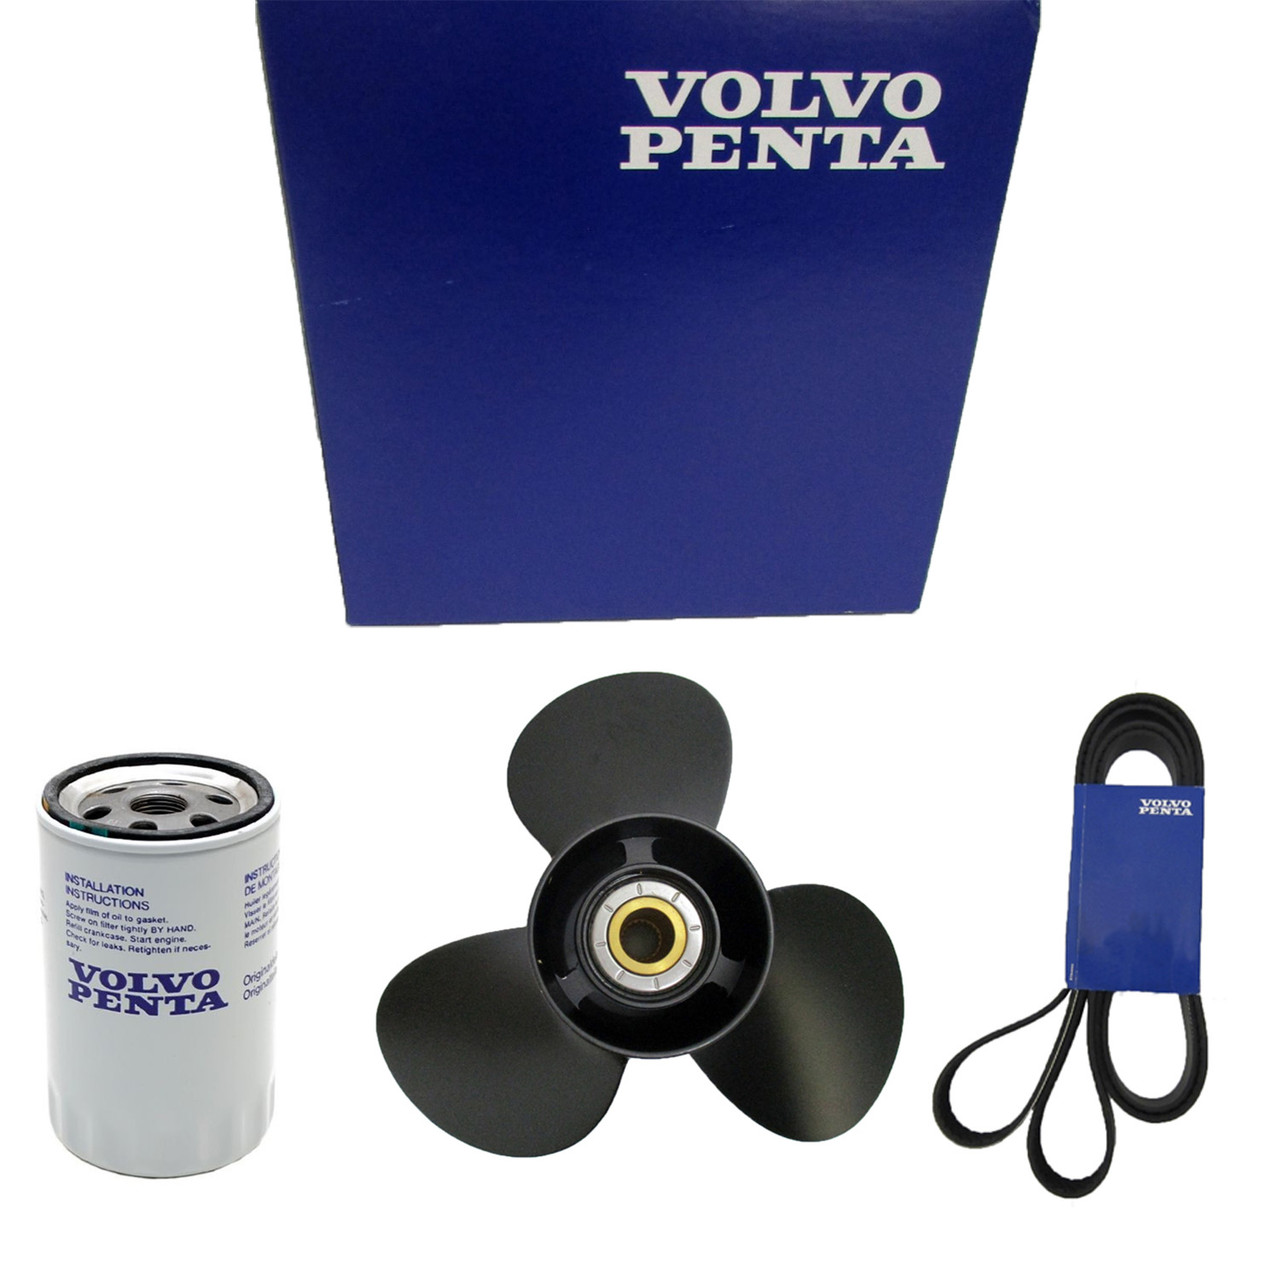 Volvo Penta New OEM Seawater Filter, 21368500